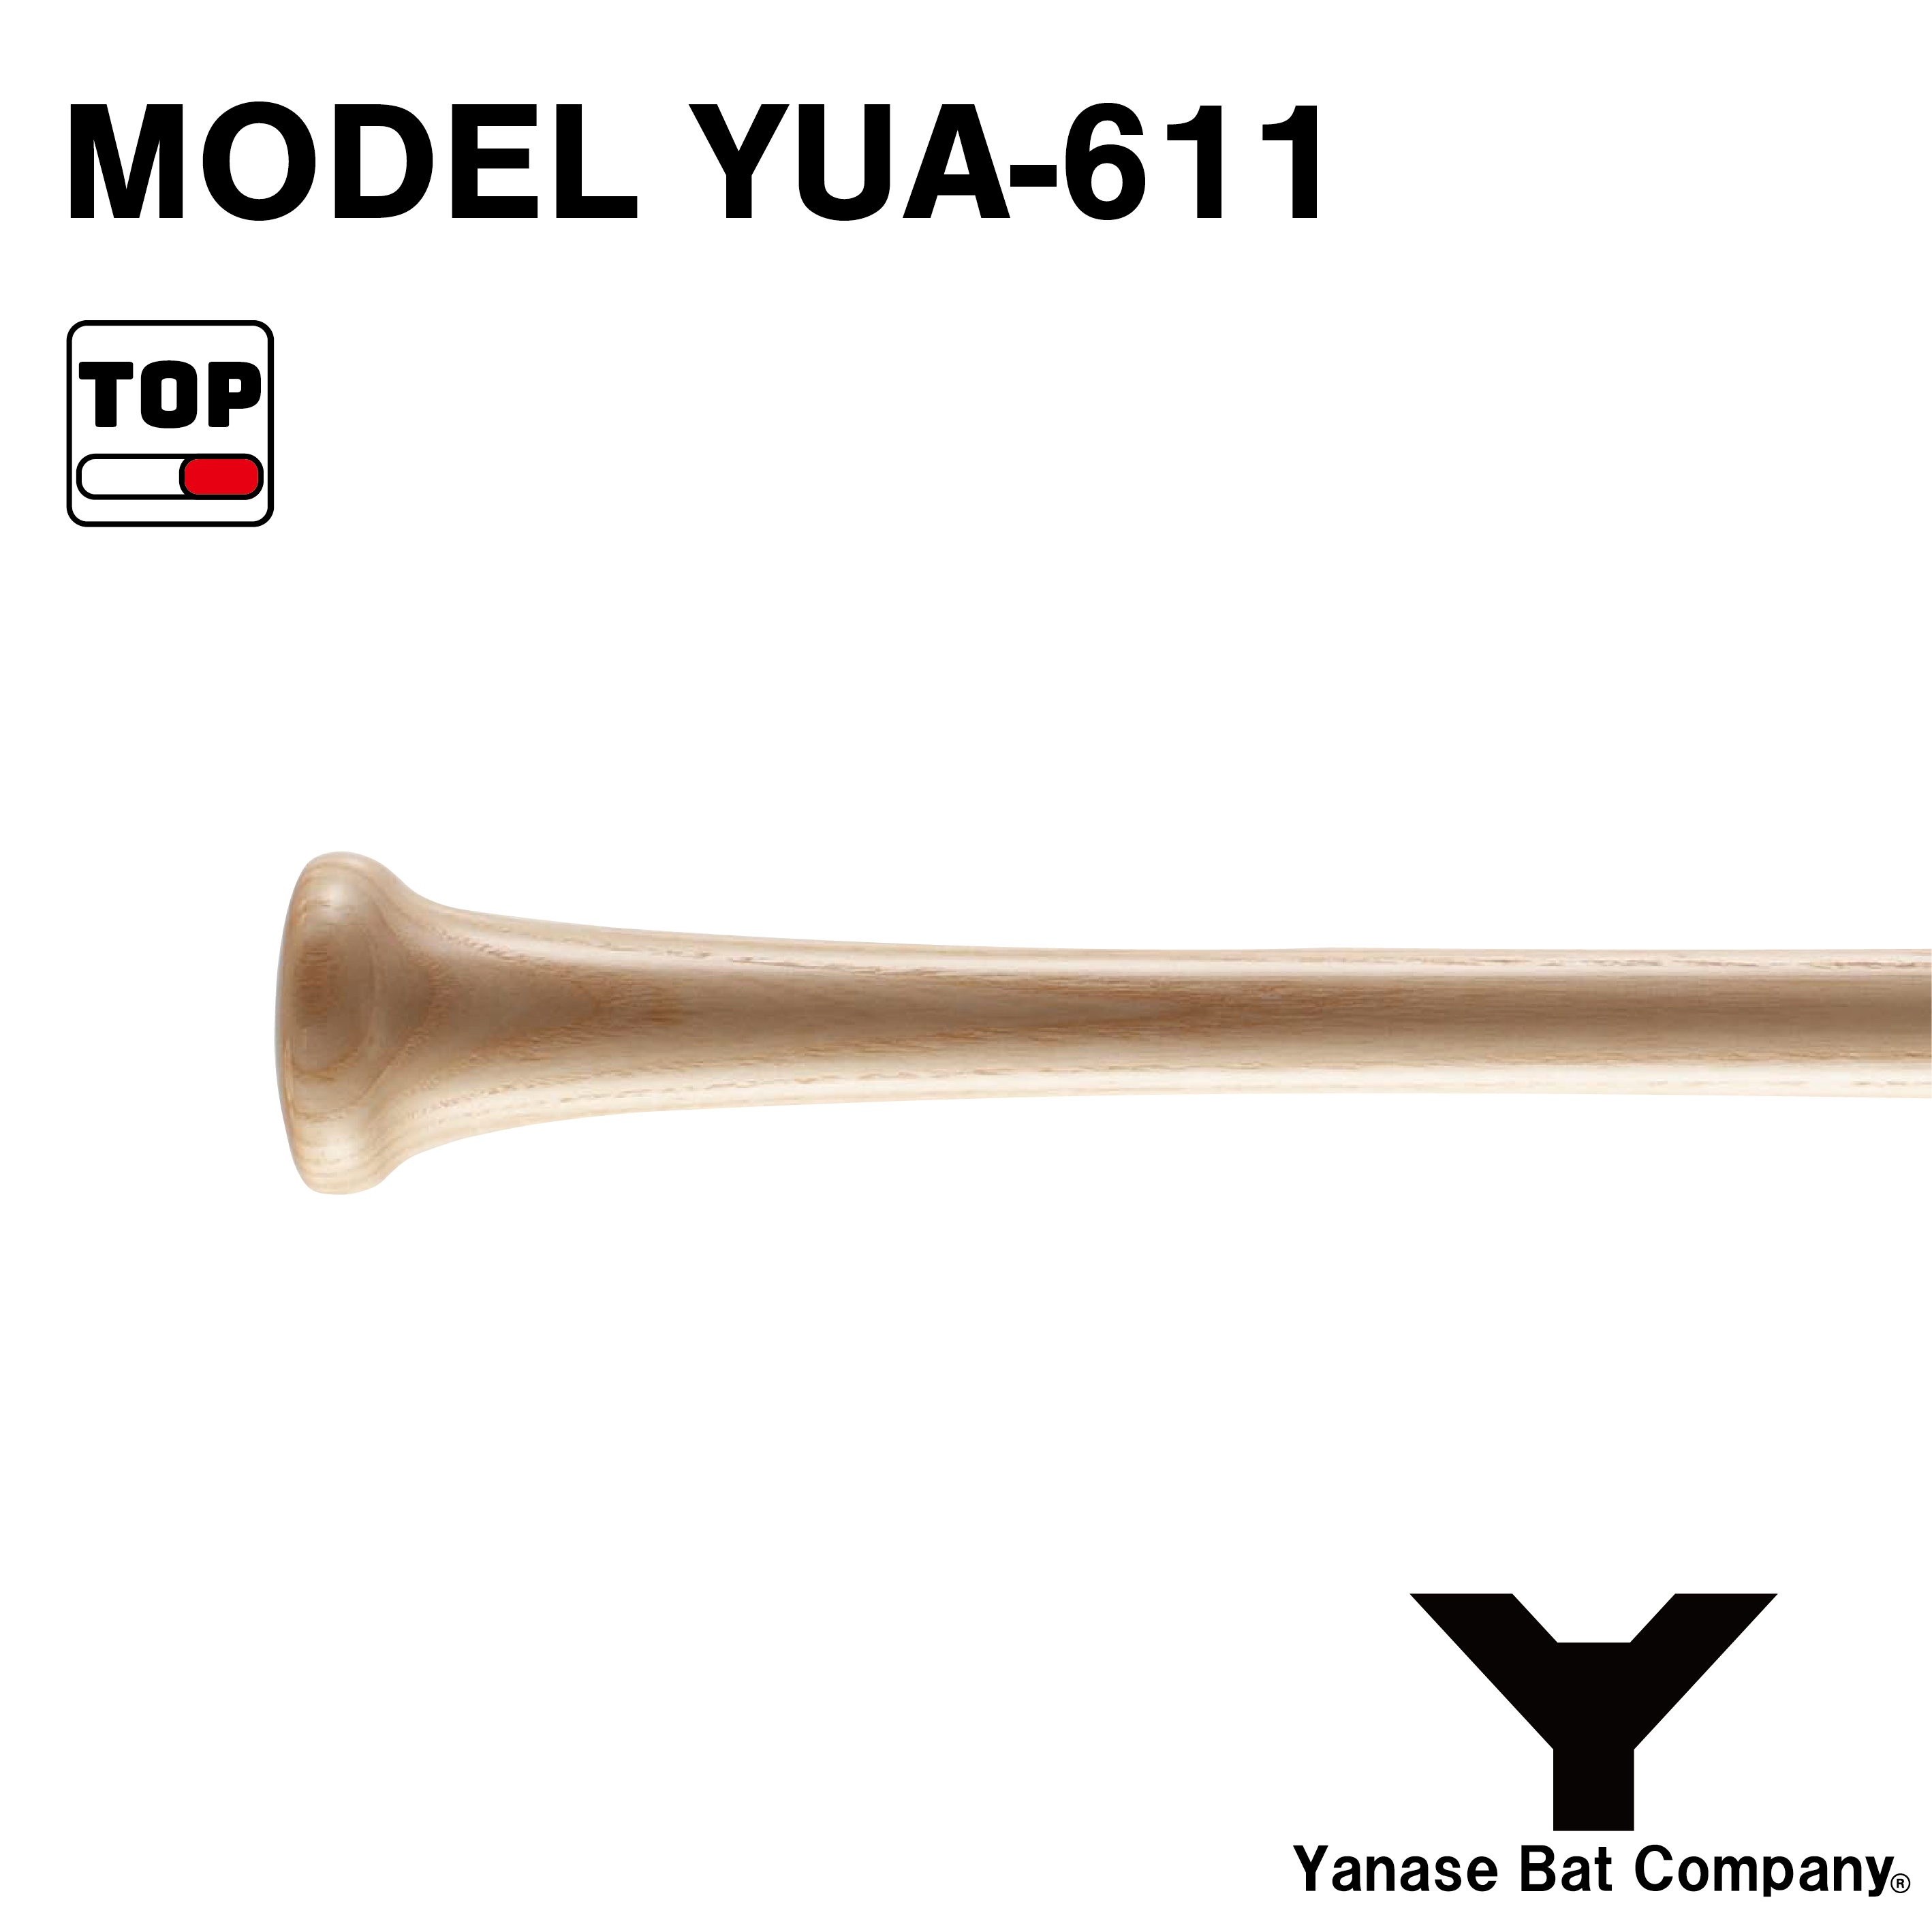 YUA-611 - YANASE BAT COMPANY